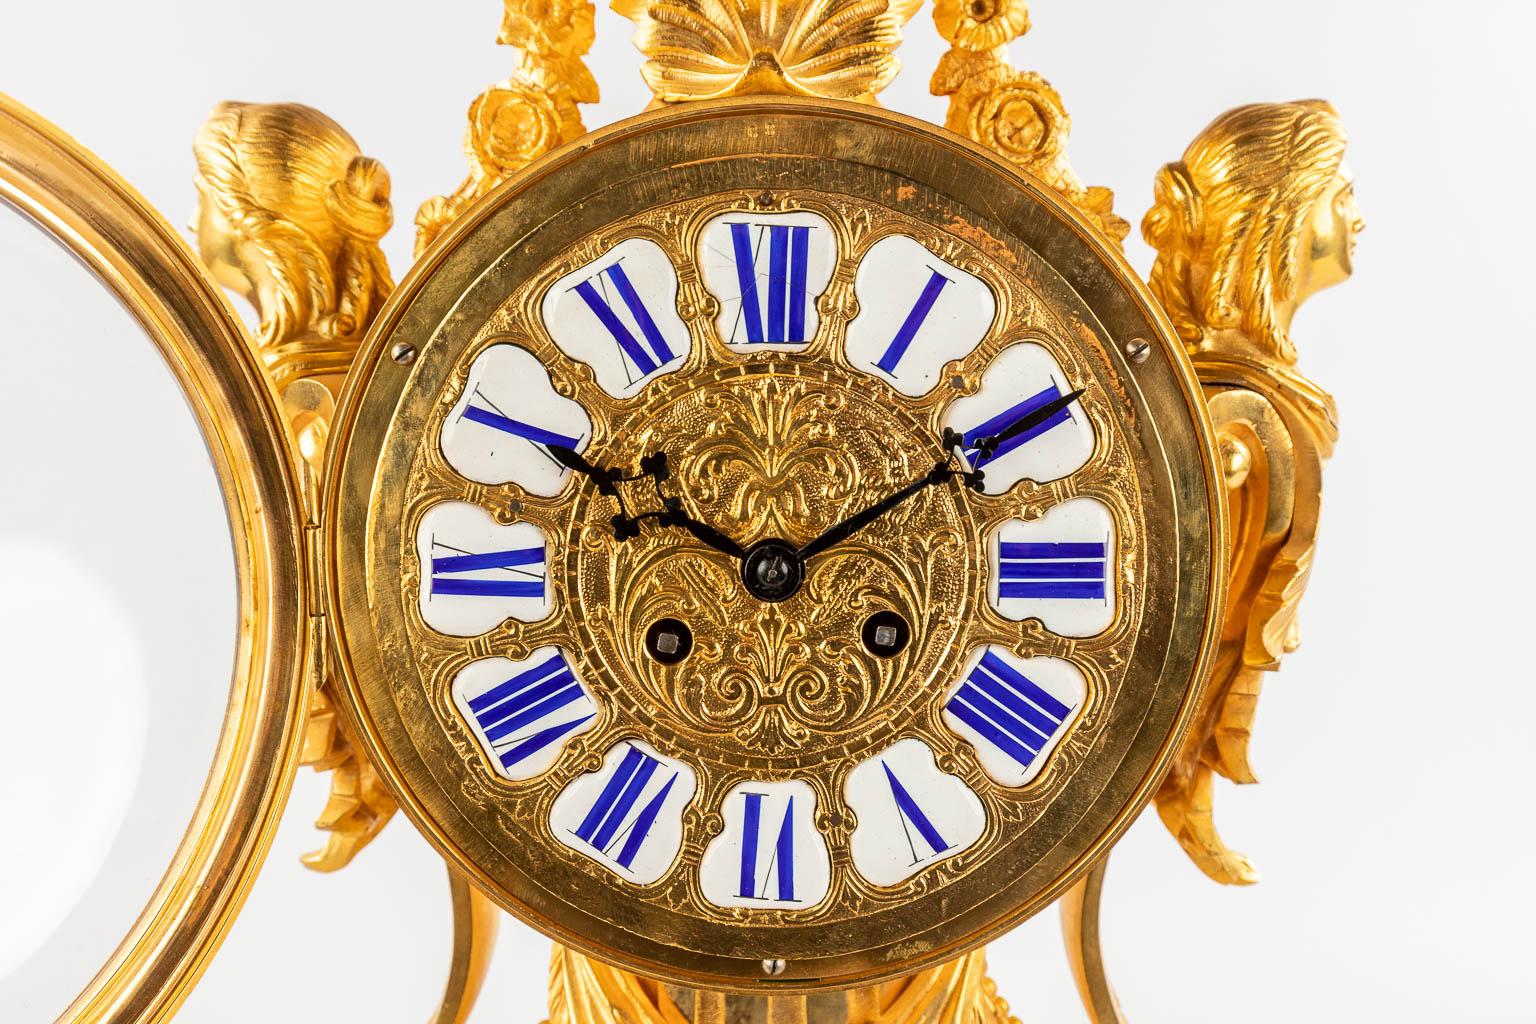 A three-piece mantle garniture clock and candelabra, gilt bronze in Louis XV style. 19th C. (D:28 x W:50 x H:61 cm)